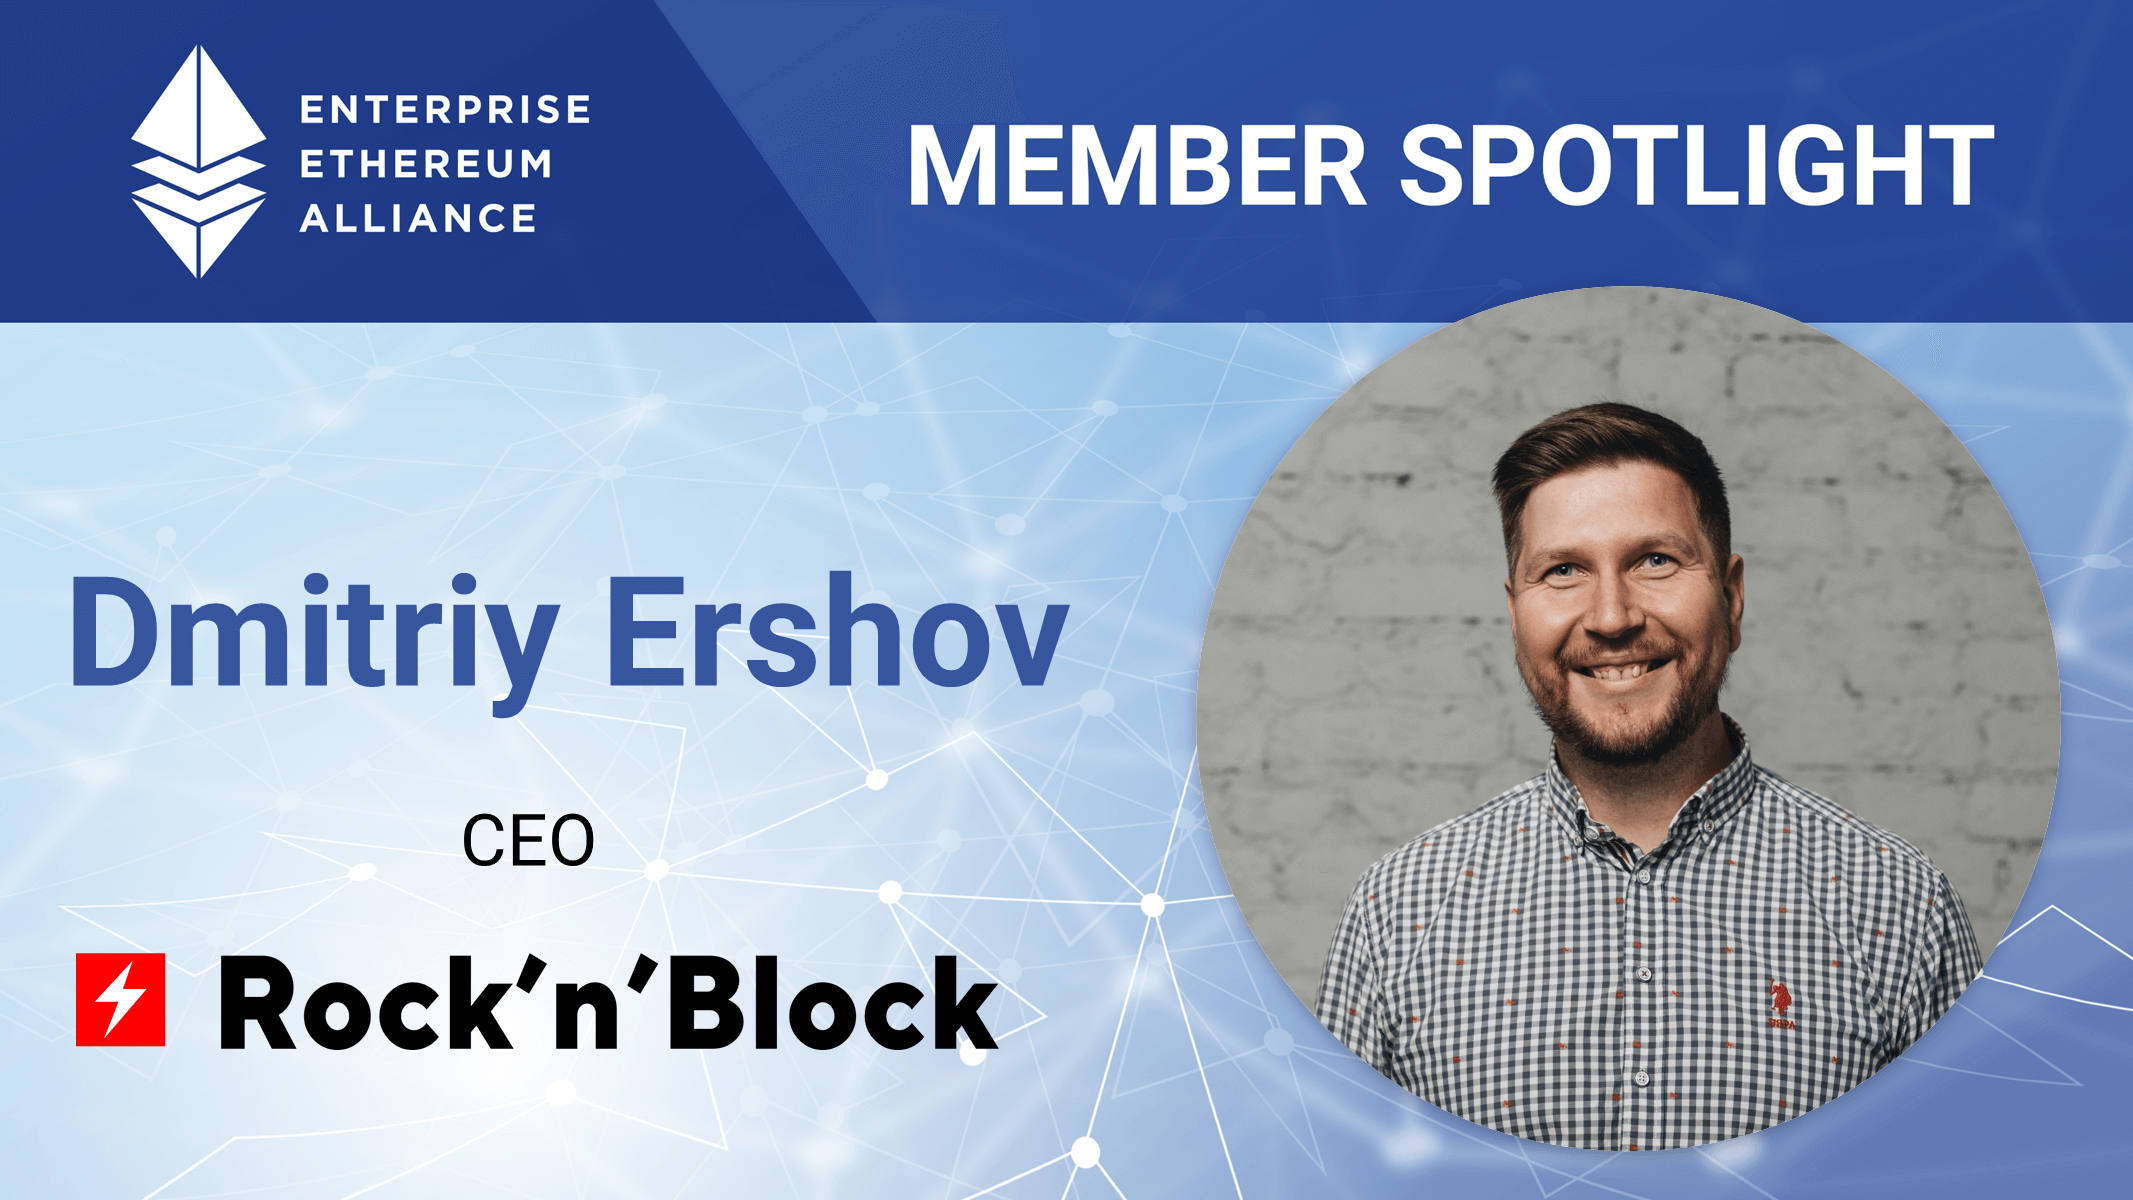 Rock'n'Blocks CEO Dmitriy Ershov in the membership spotlight of the Enterprise Ethereum Alliance